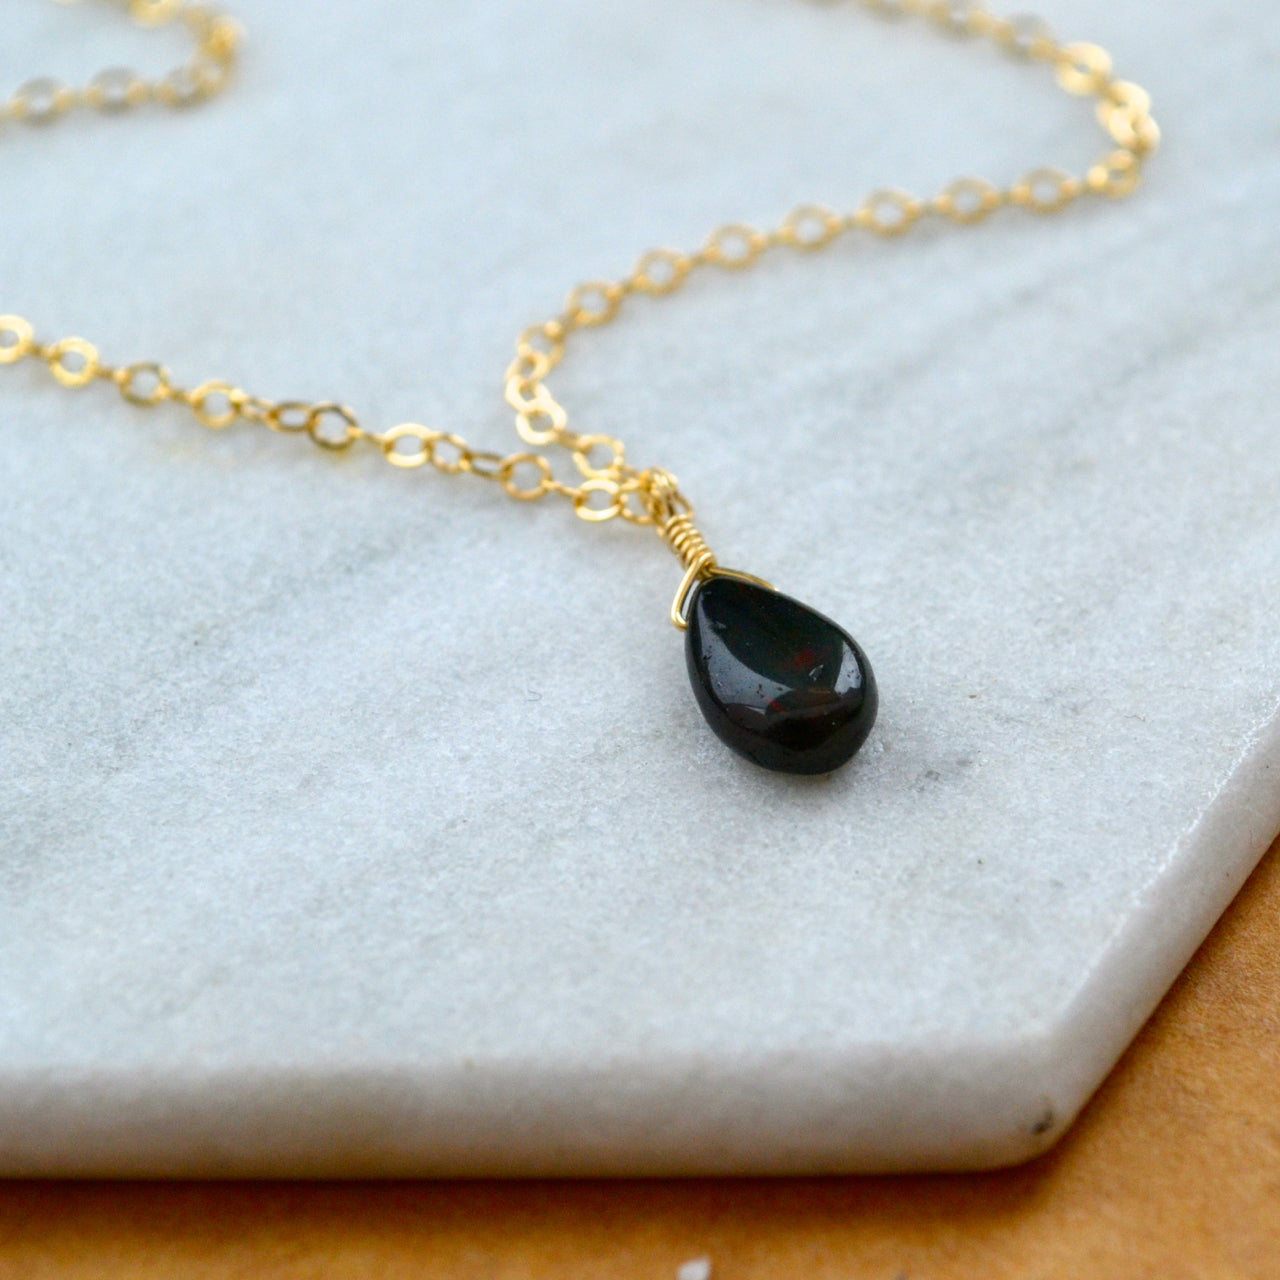 Ember necklace black opal gemstone necklace handmade gem pendant black stone necklace simple gem charm black opal gold necklace sustainable jewelry